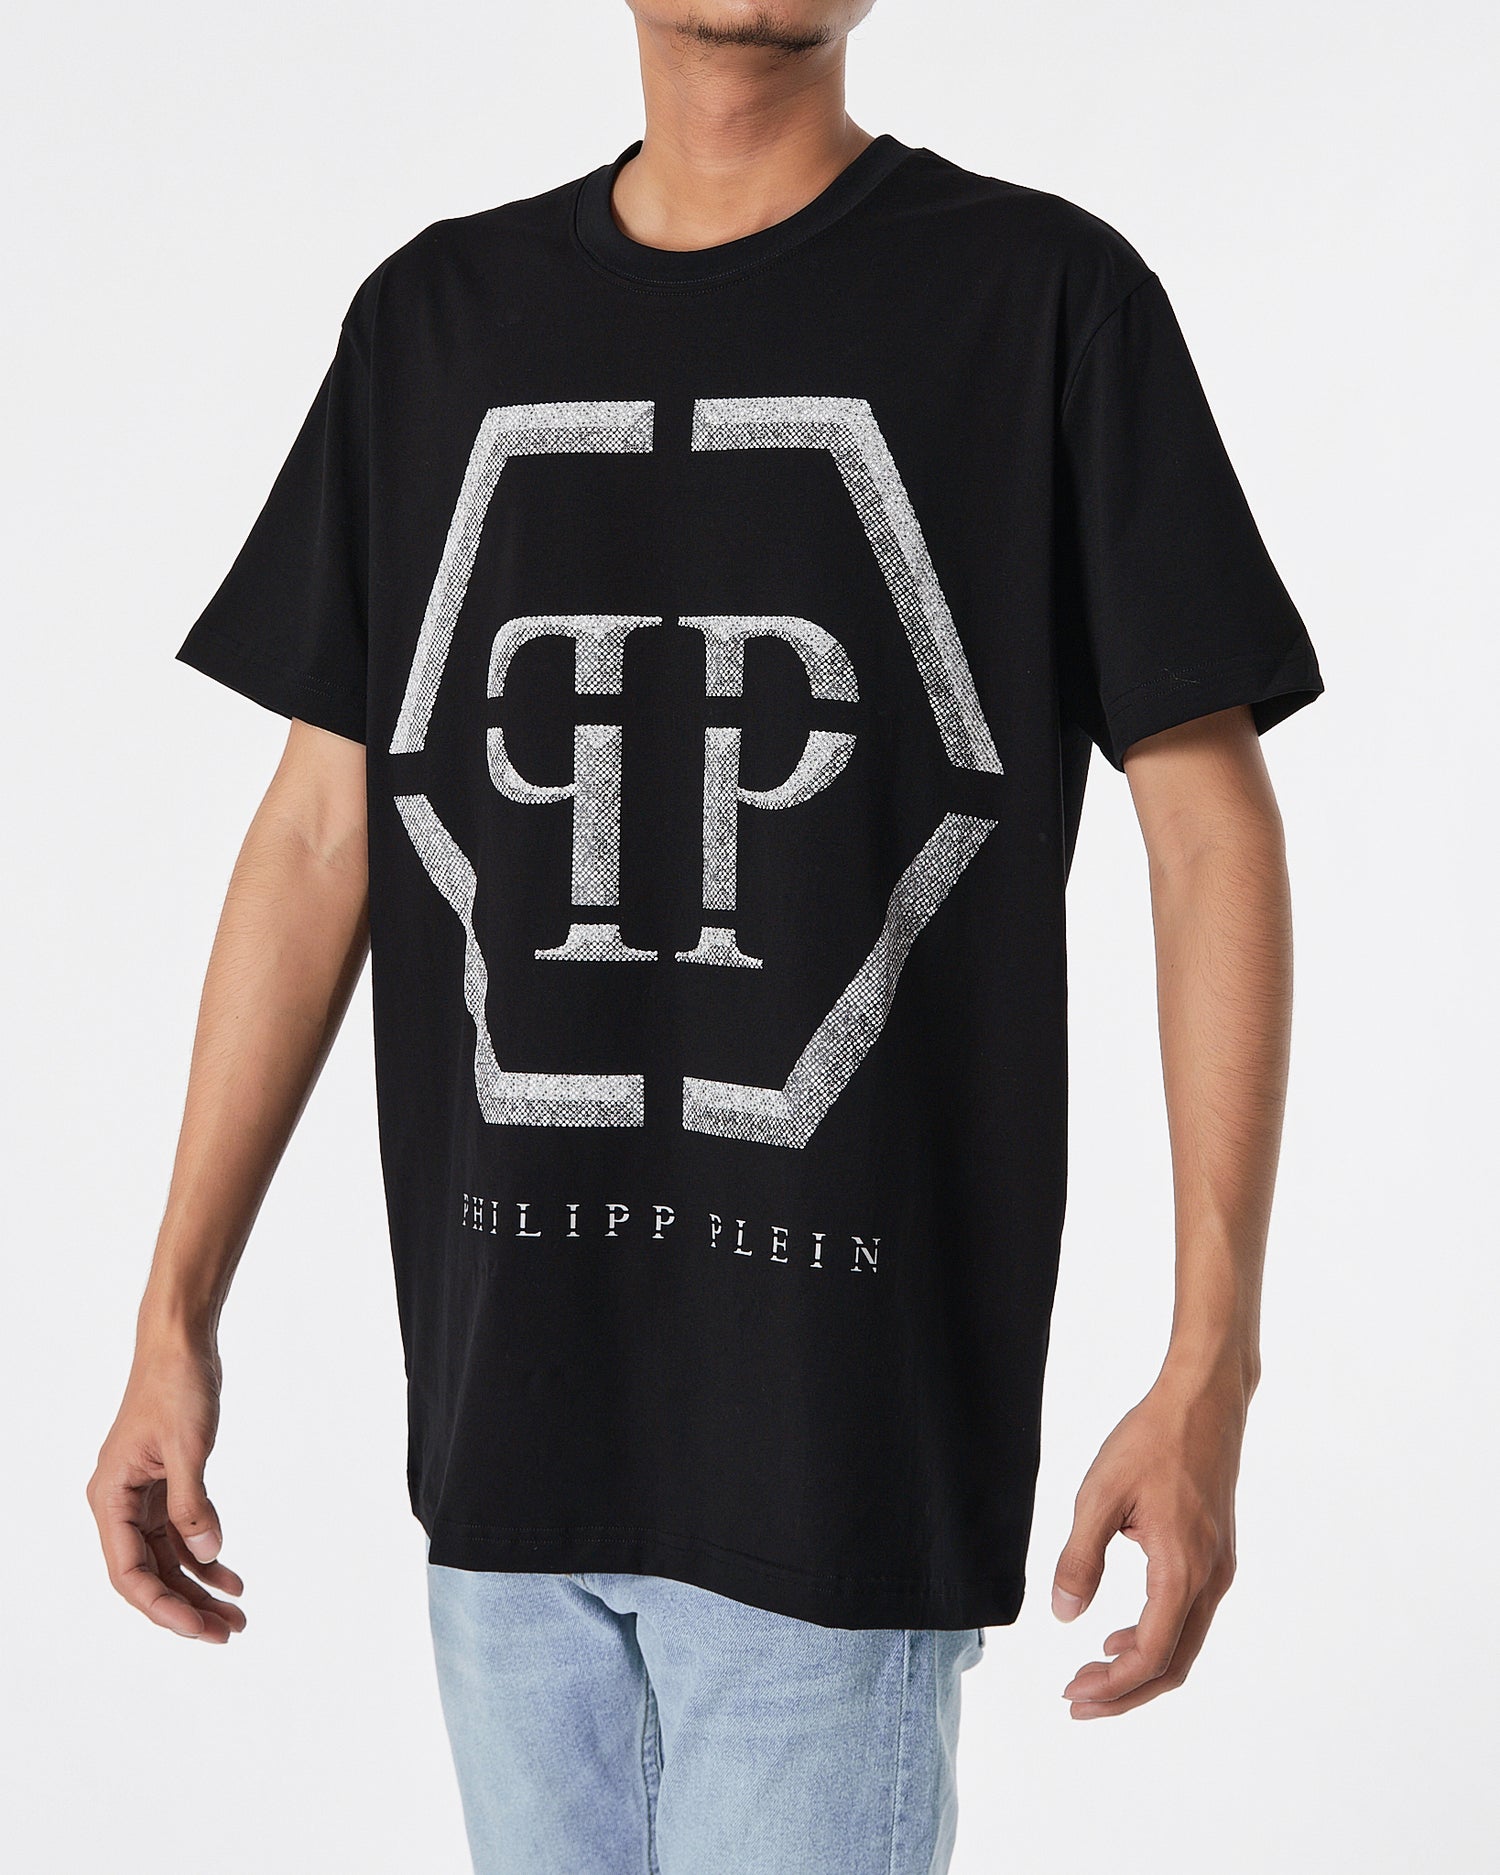 PP Logo Printed Men Black T-Shirt 15.90